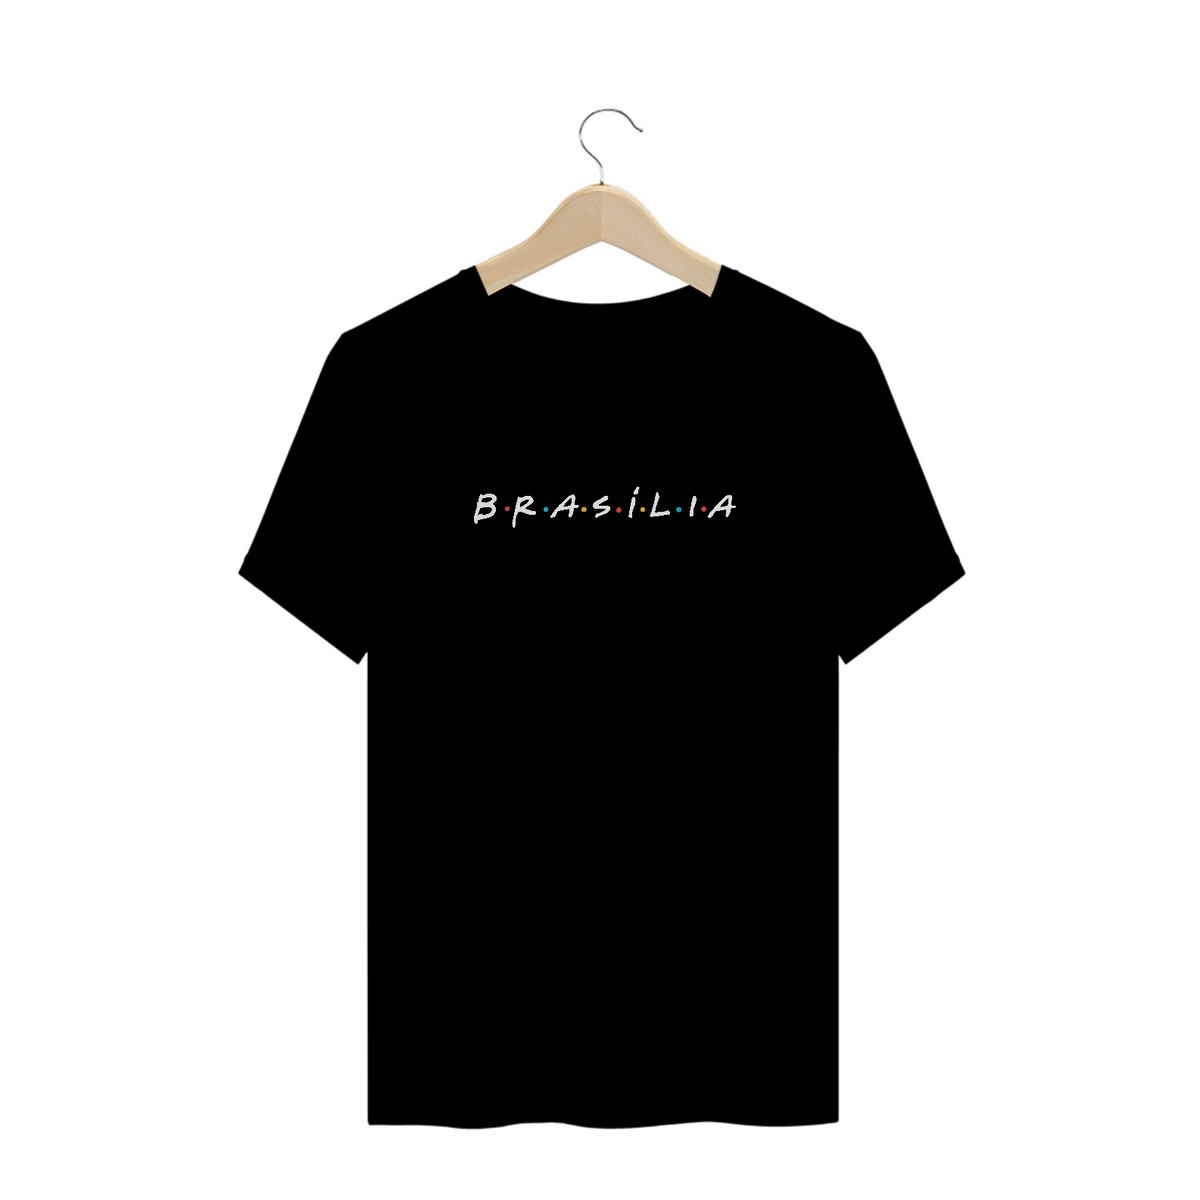 Nome do produto: Camiseta Brasília Friends - Plus size